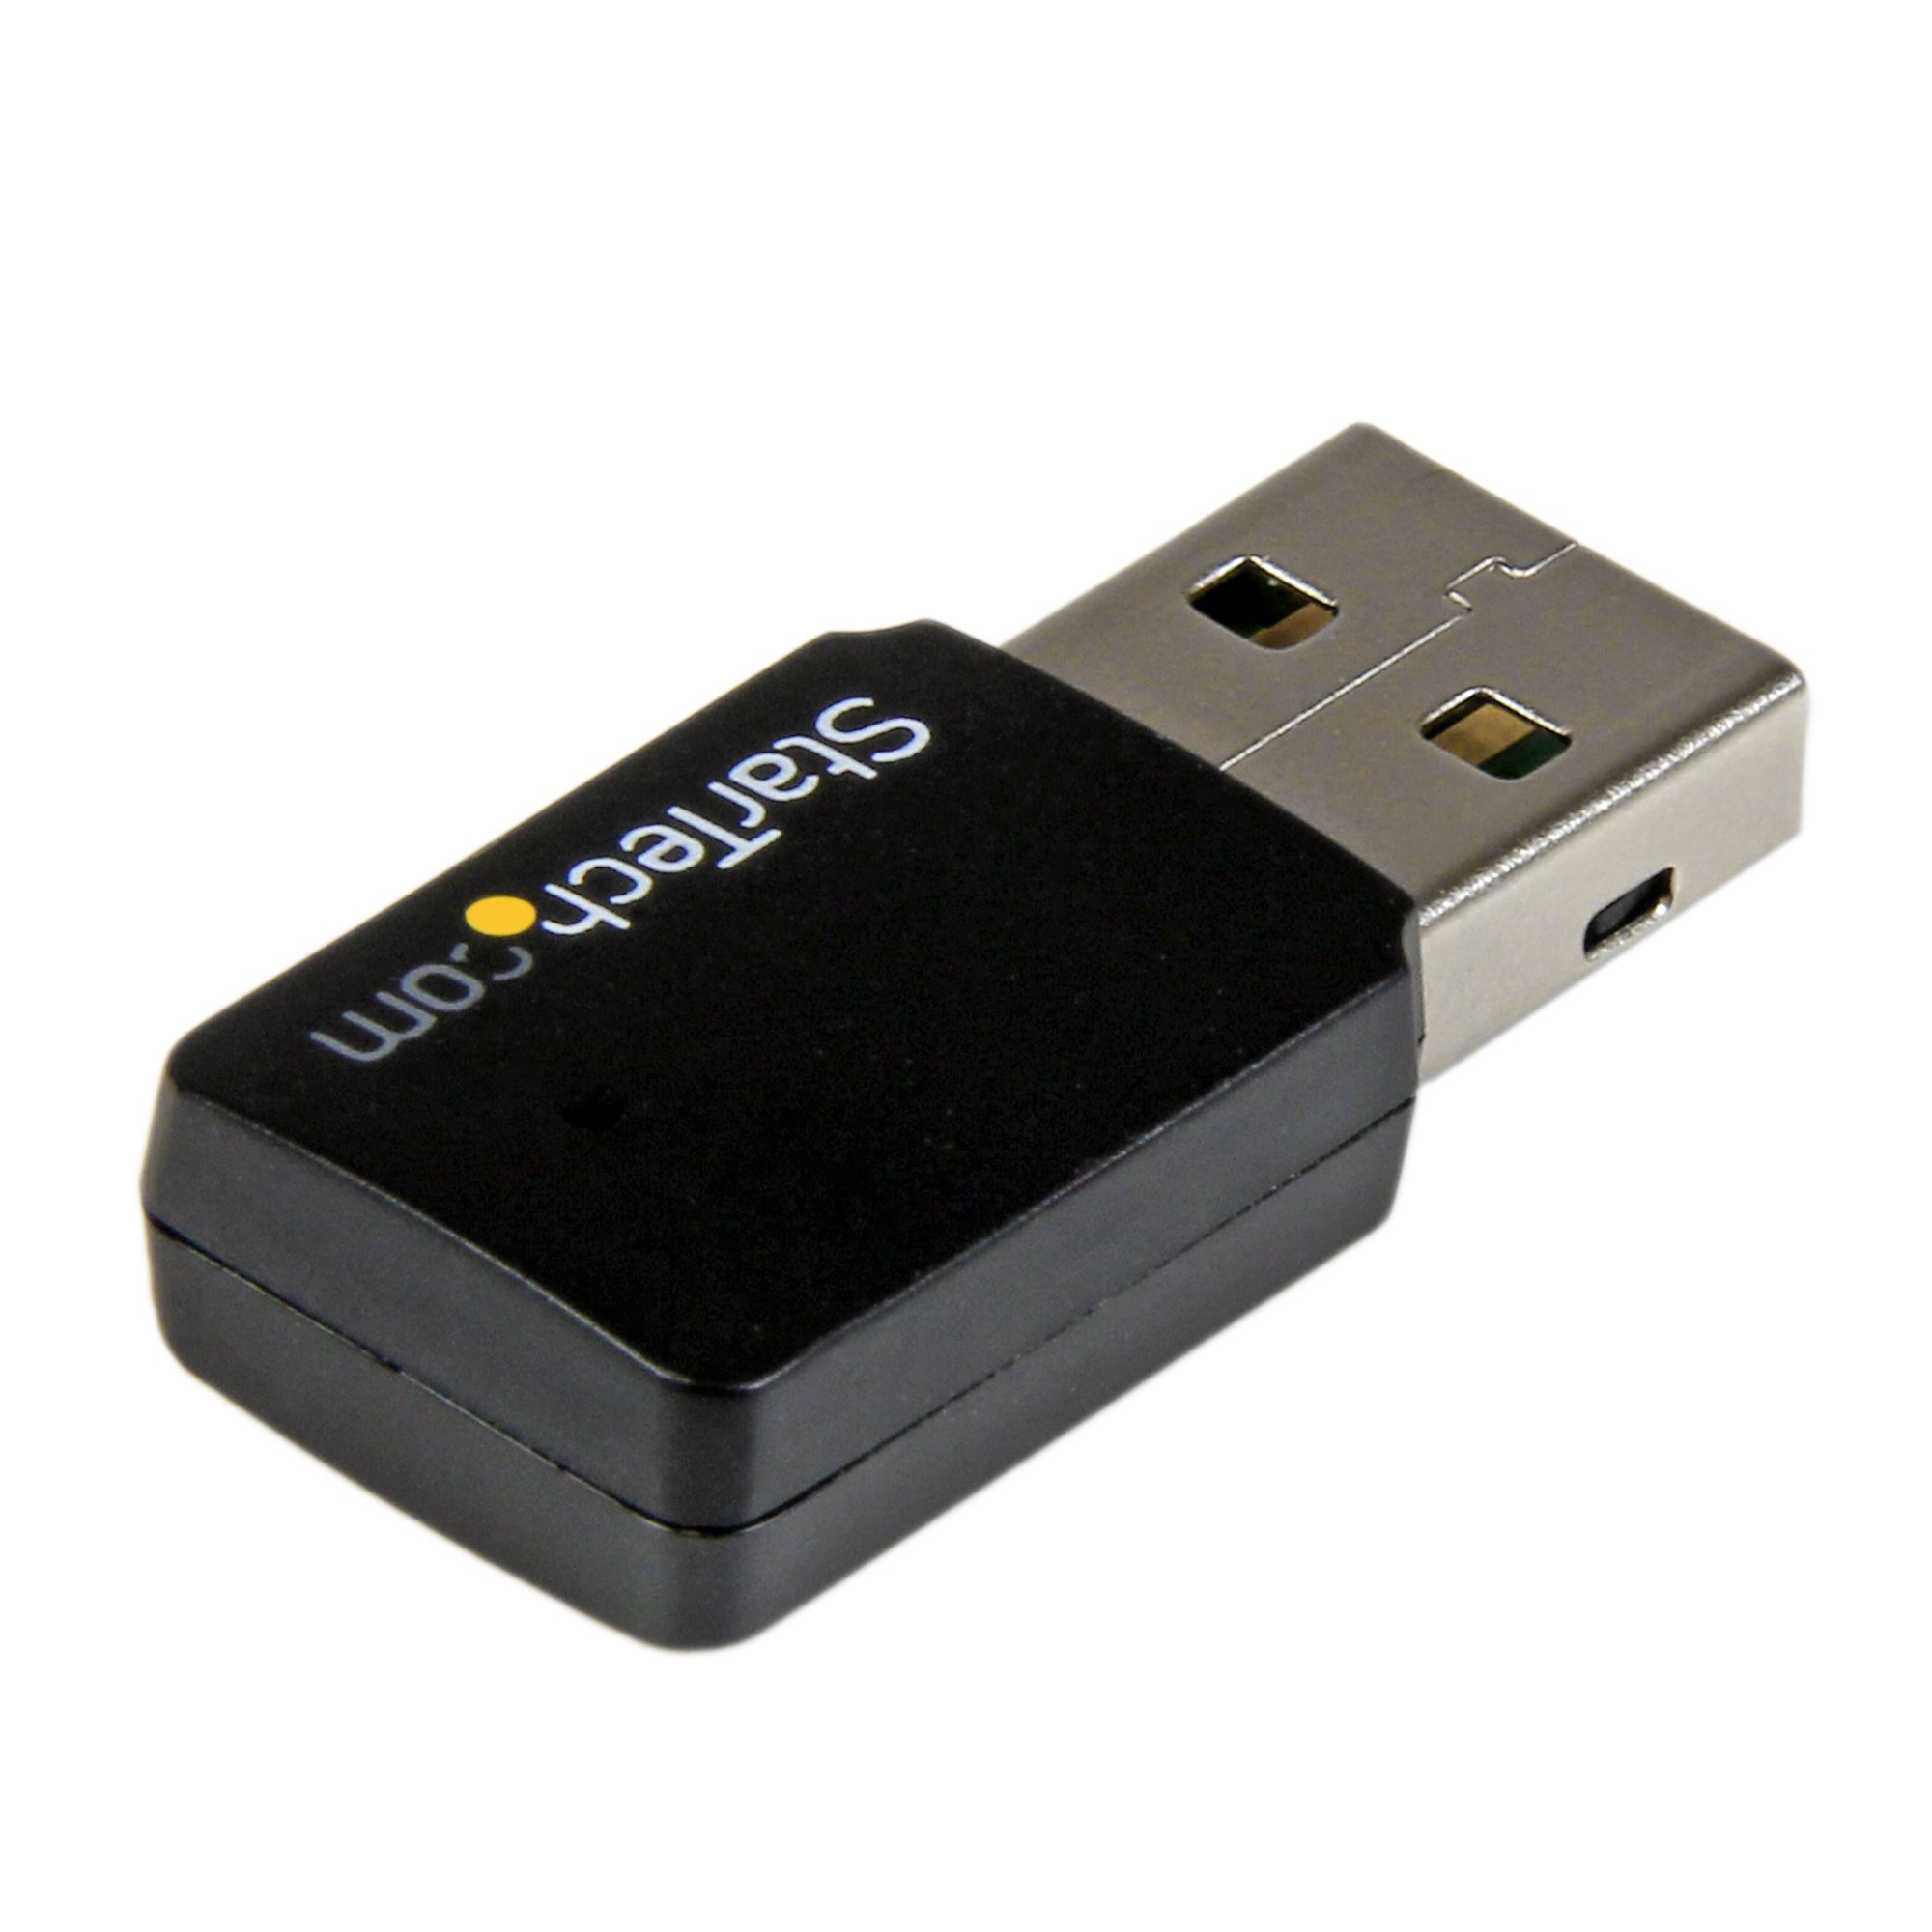 USB 2.0 Mini Wireless-AC Network Adapter - Wireless Network Adapters, Networking IO Products